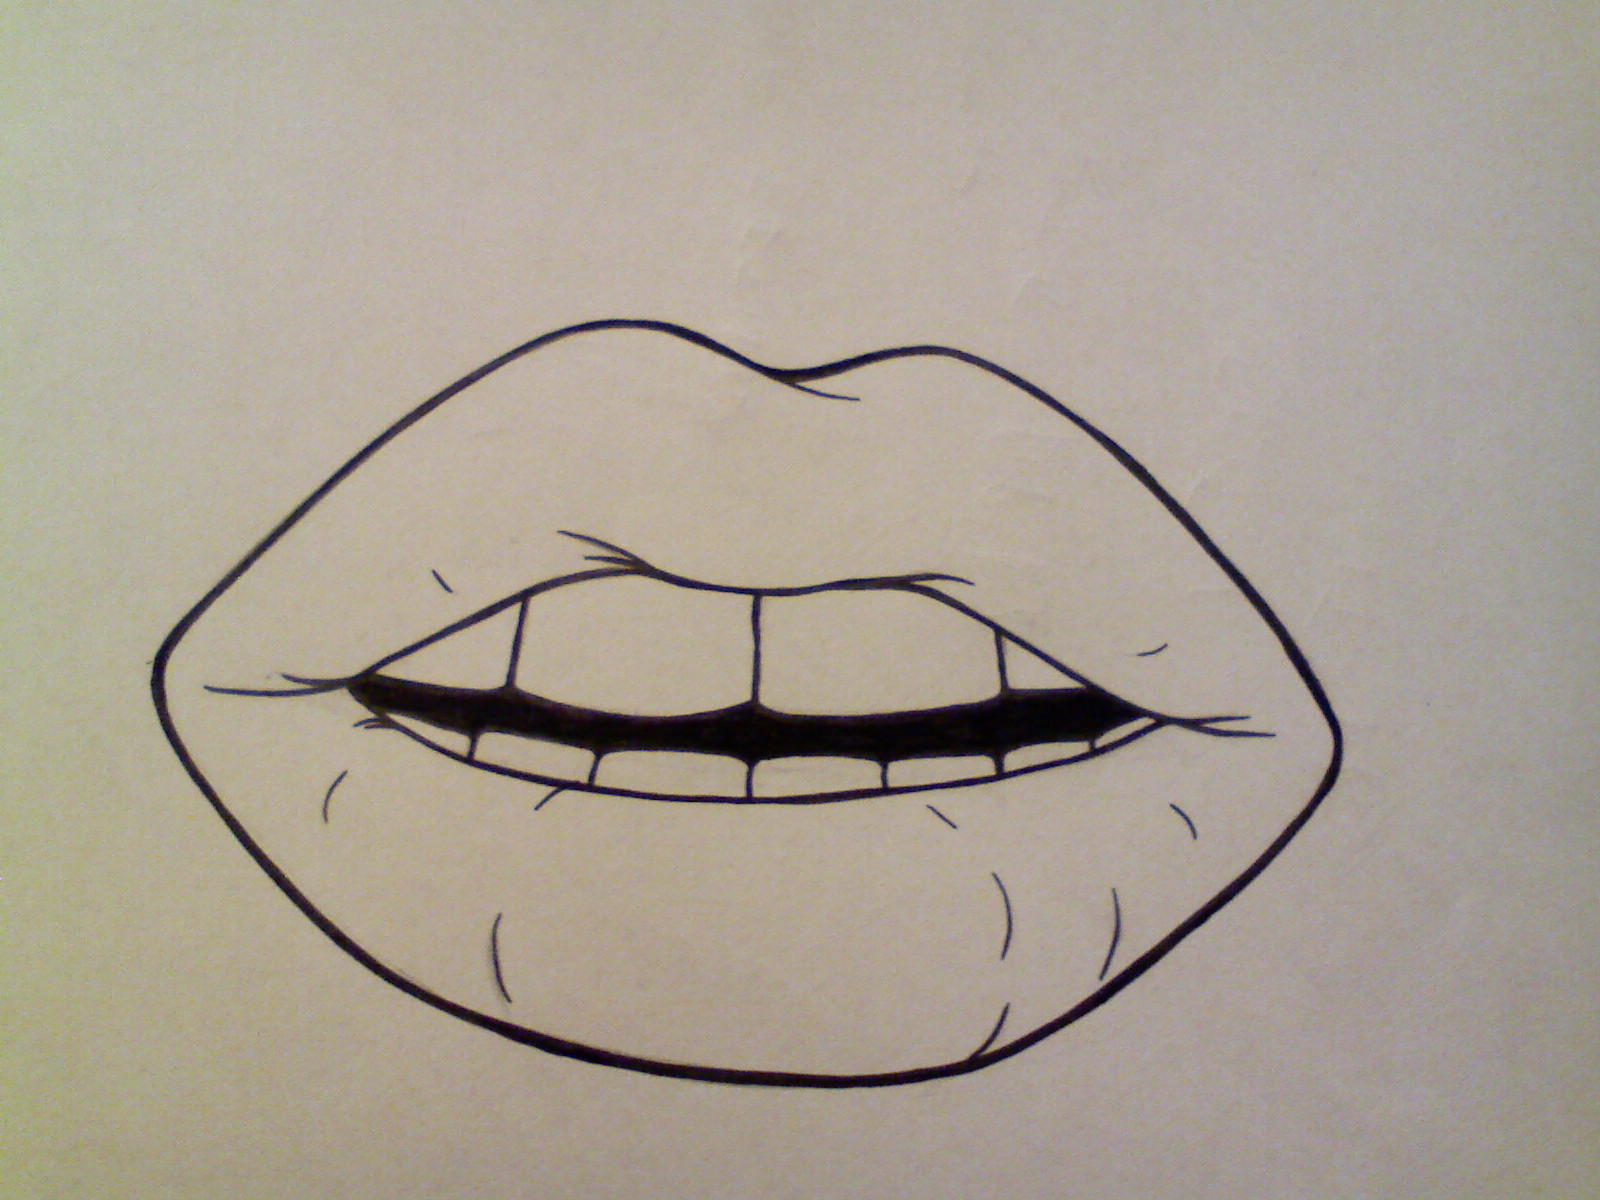 Puckered Lips Sketch